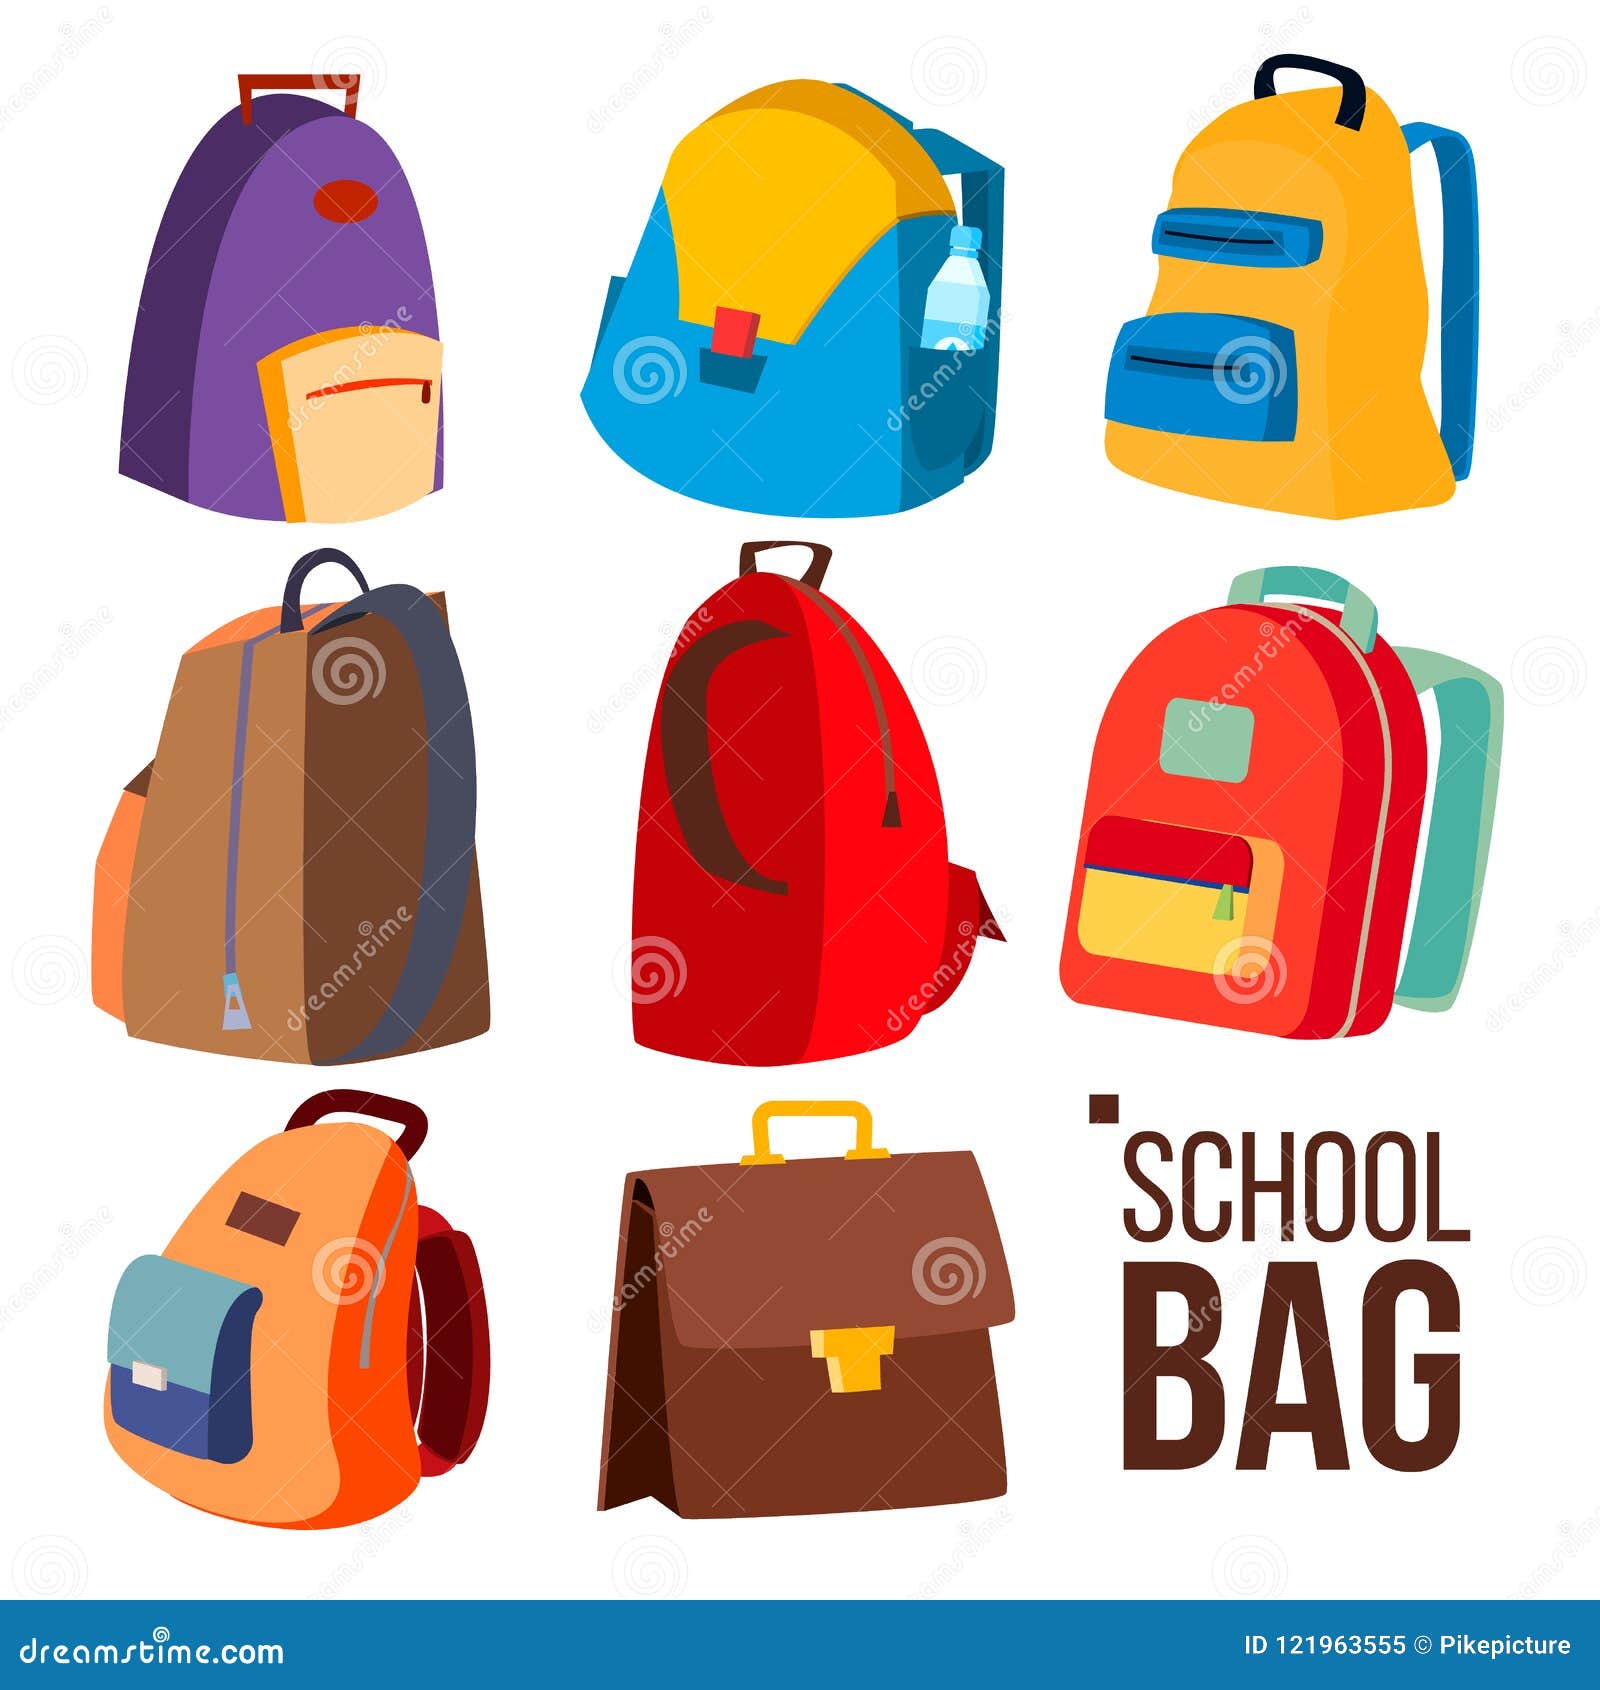 Premium Vector  This cartoon clipart shows a school bag illustration